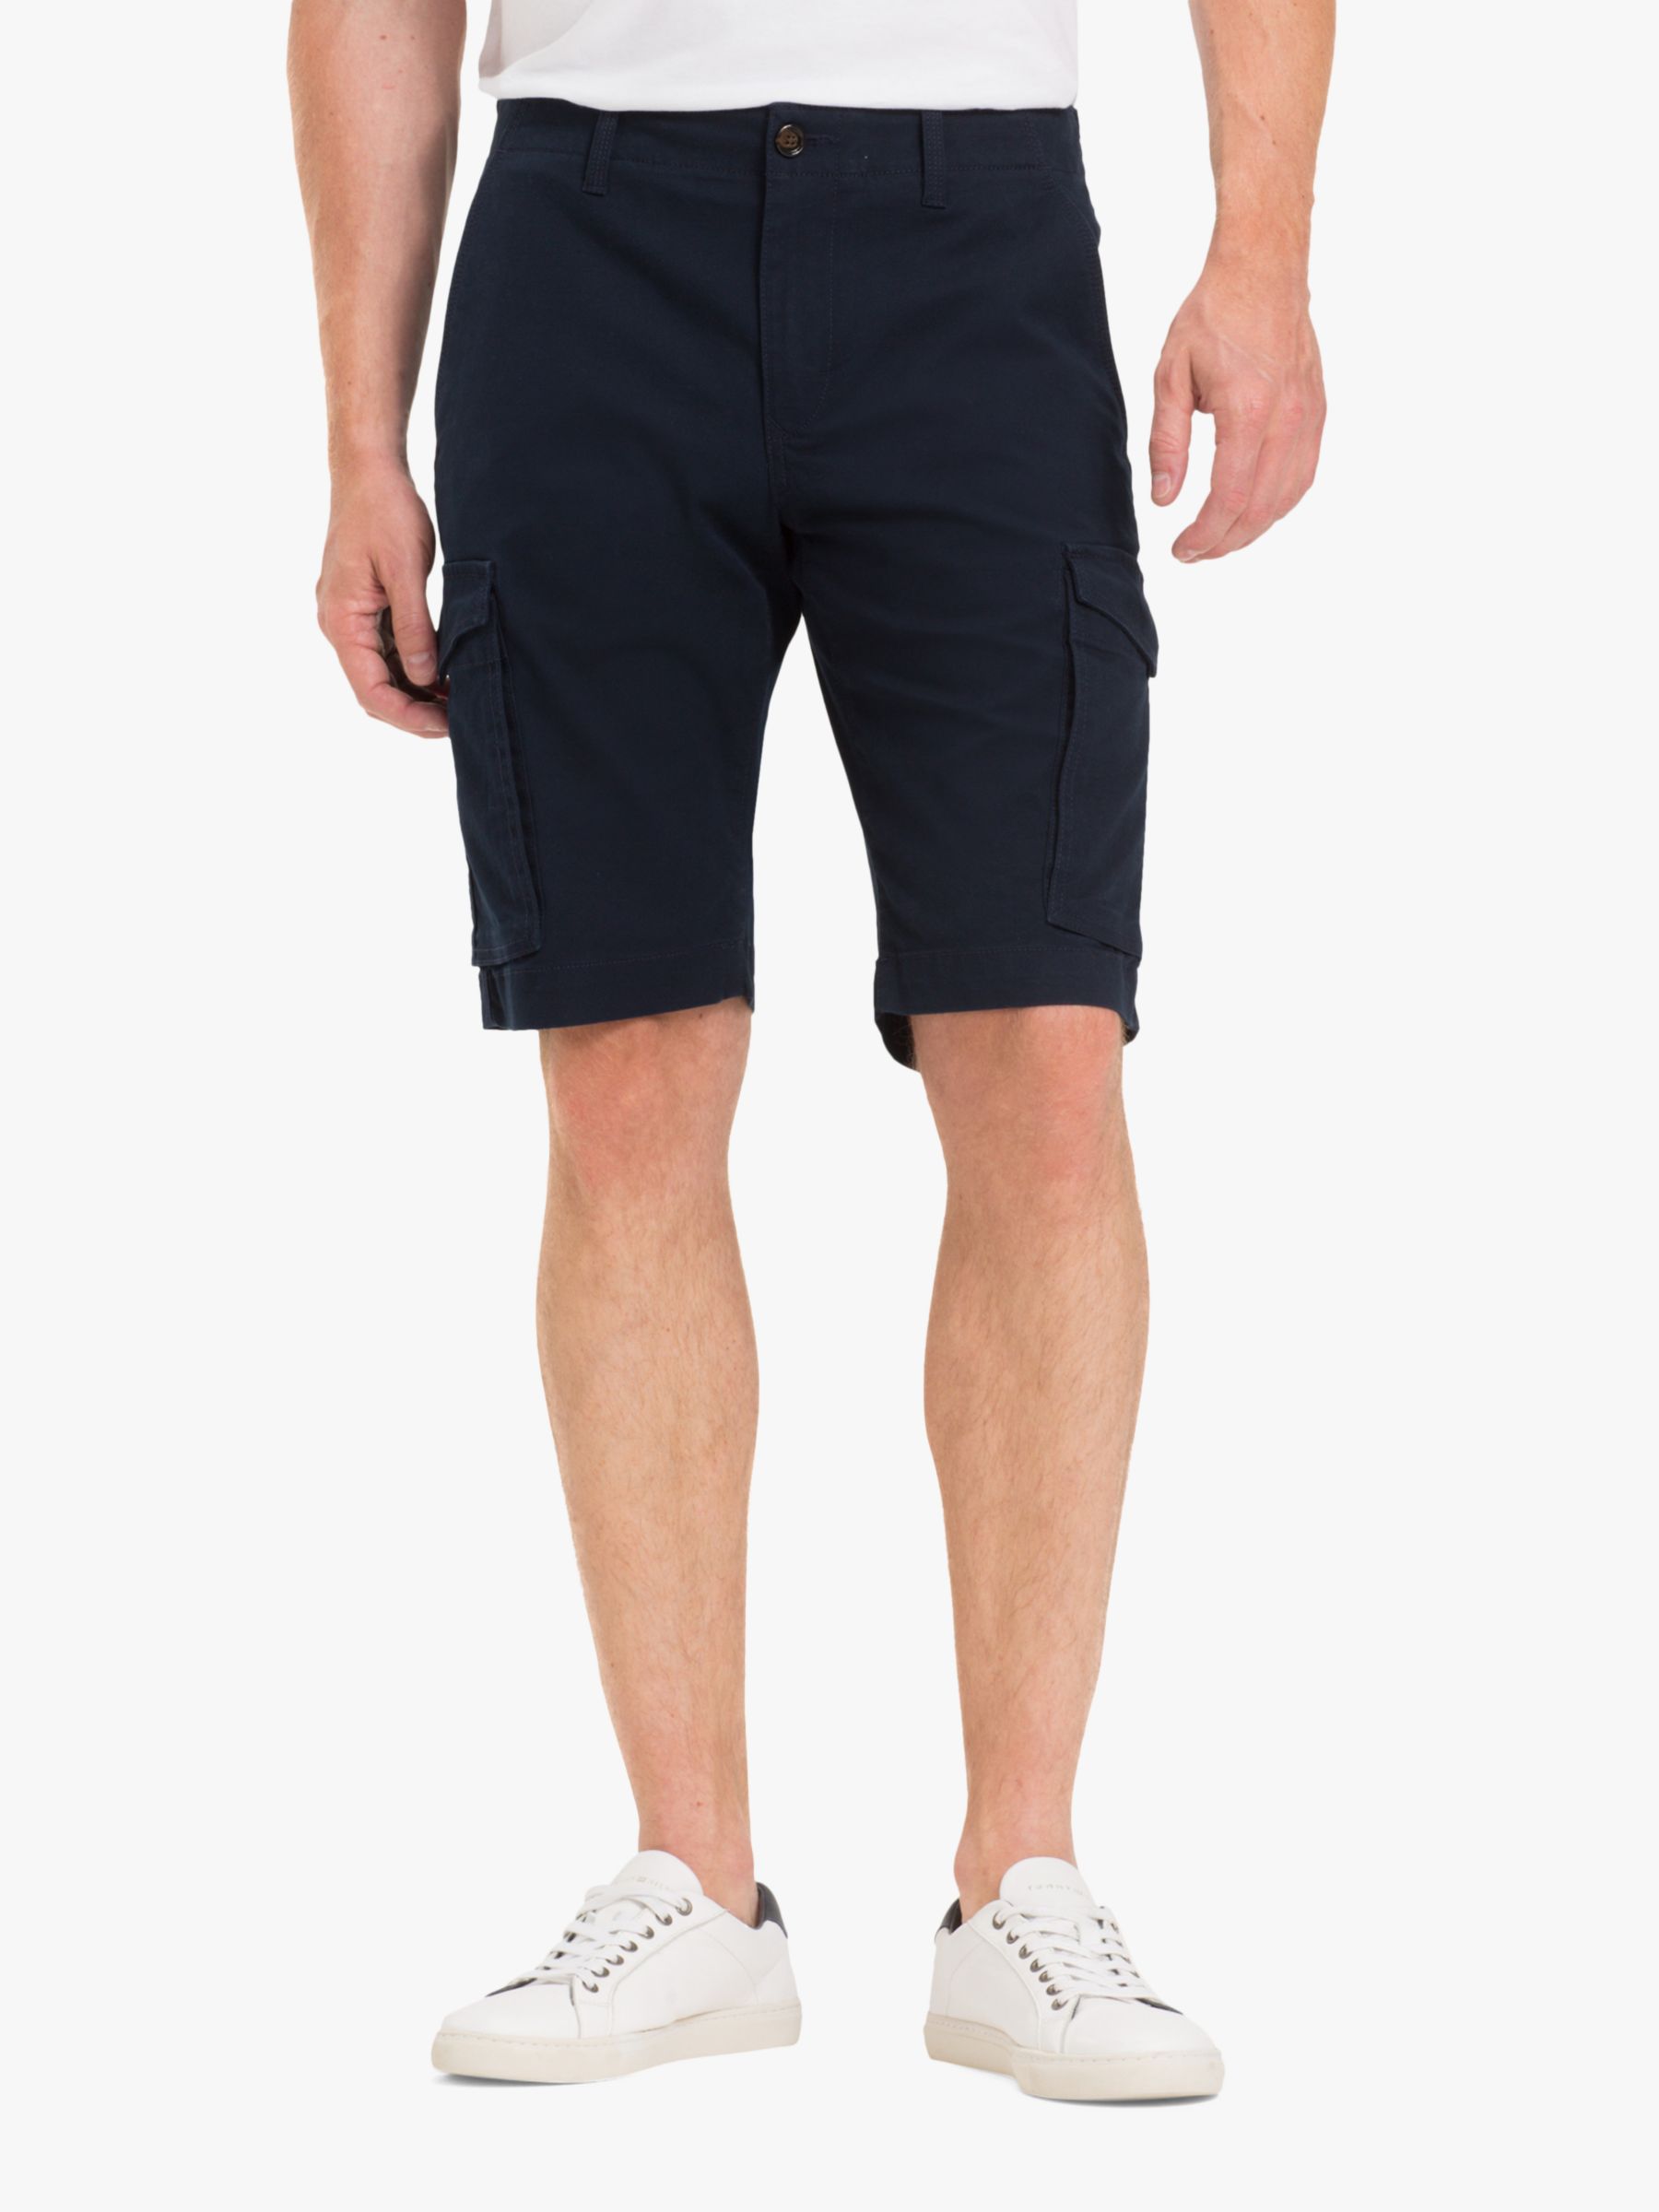 hilfiger john cargo shorts